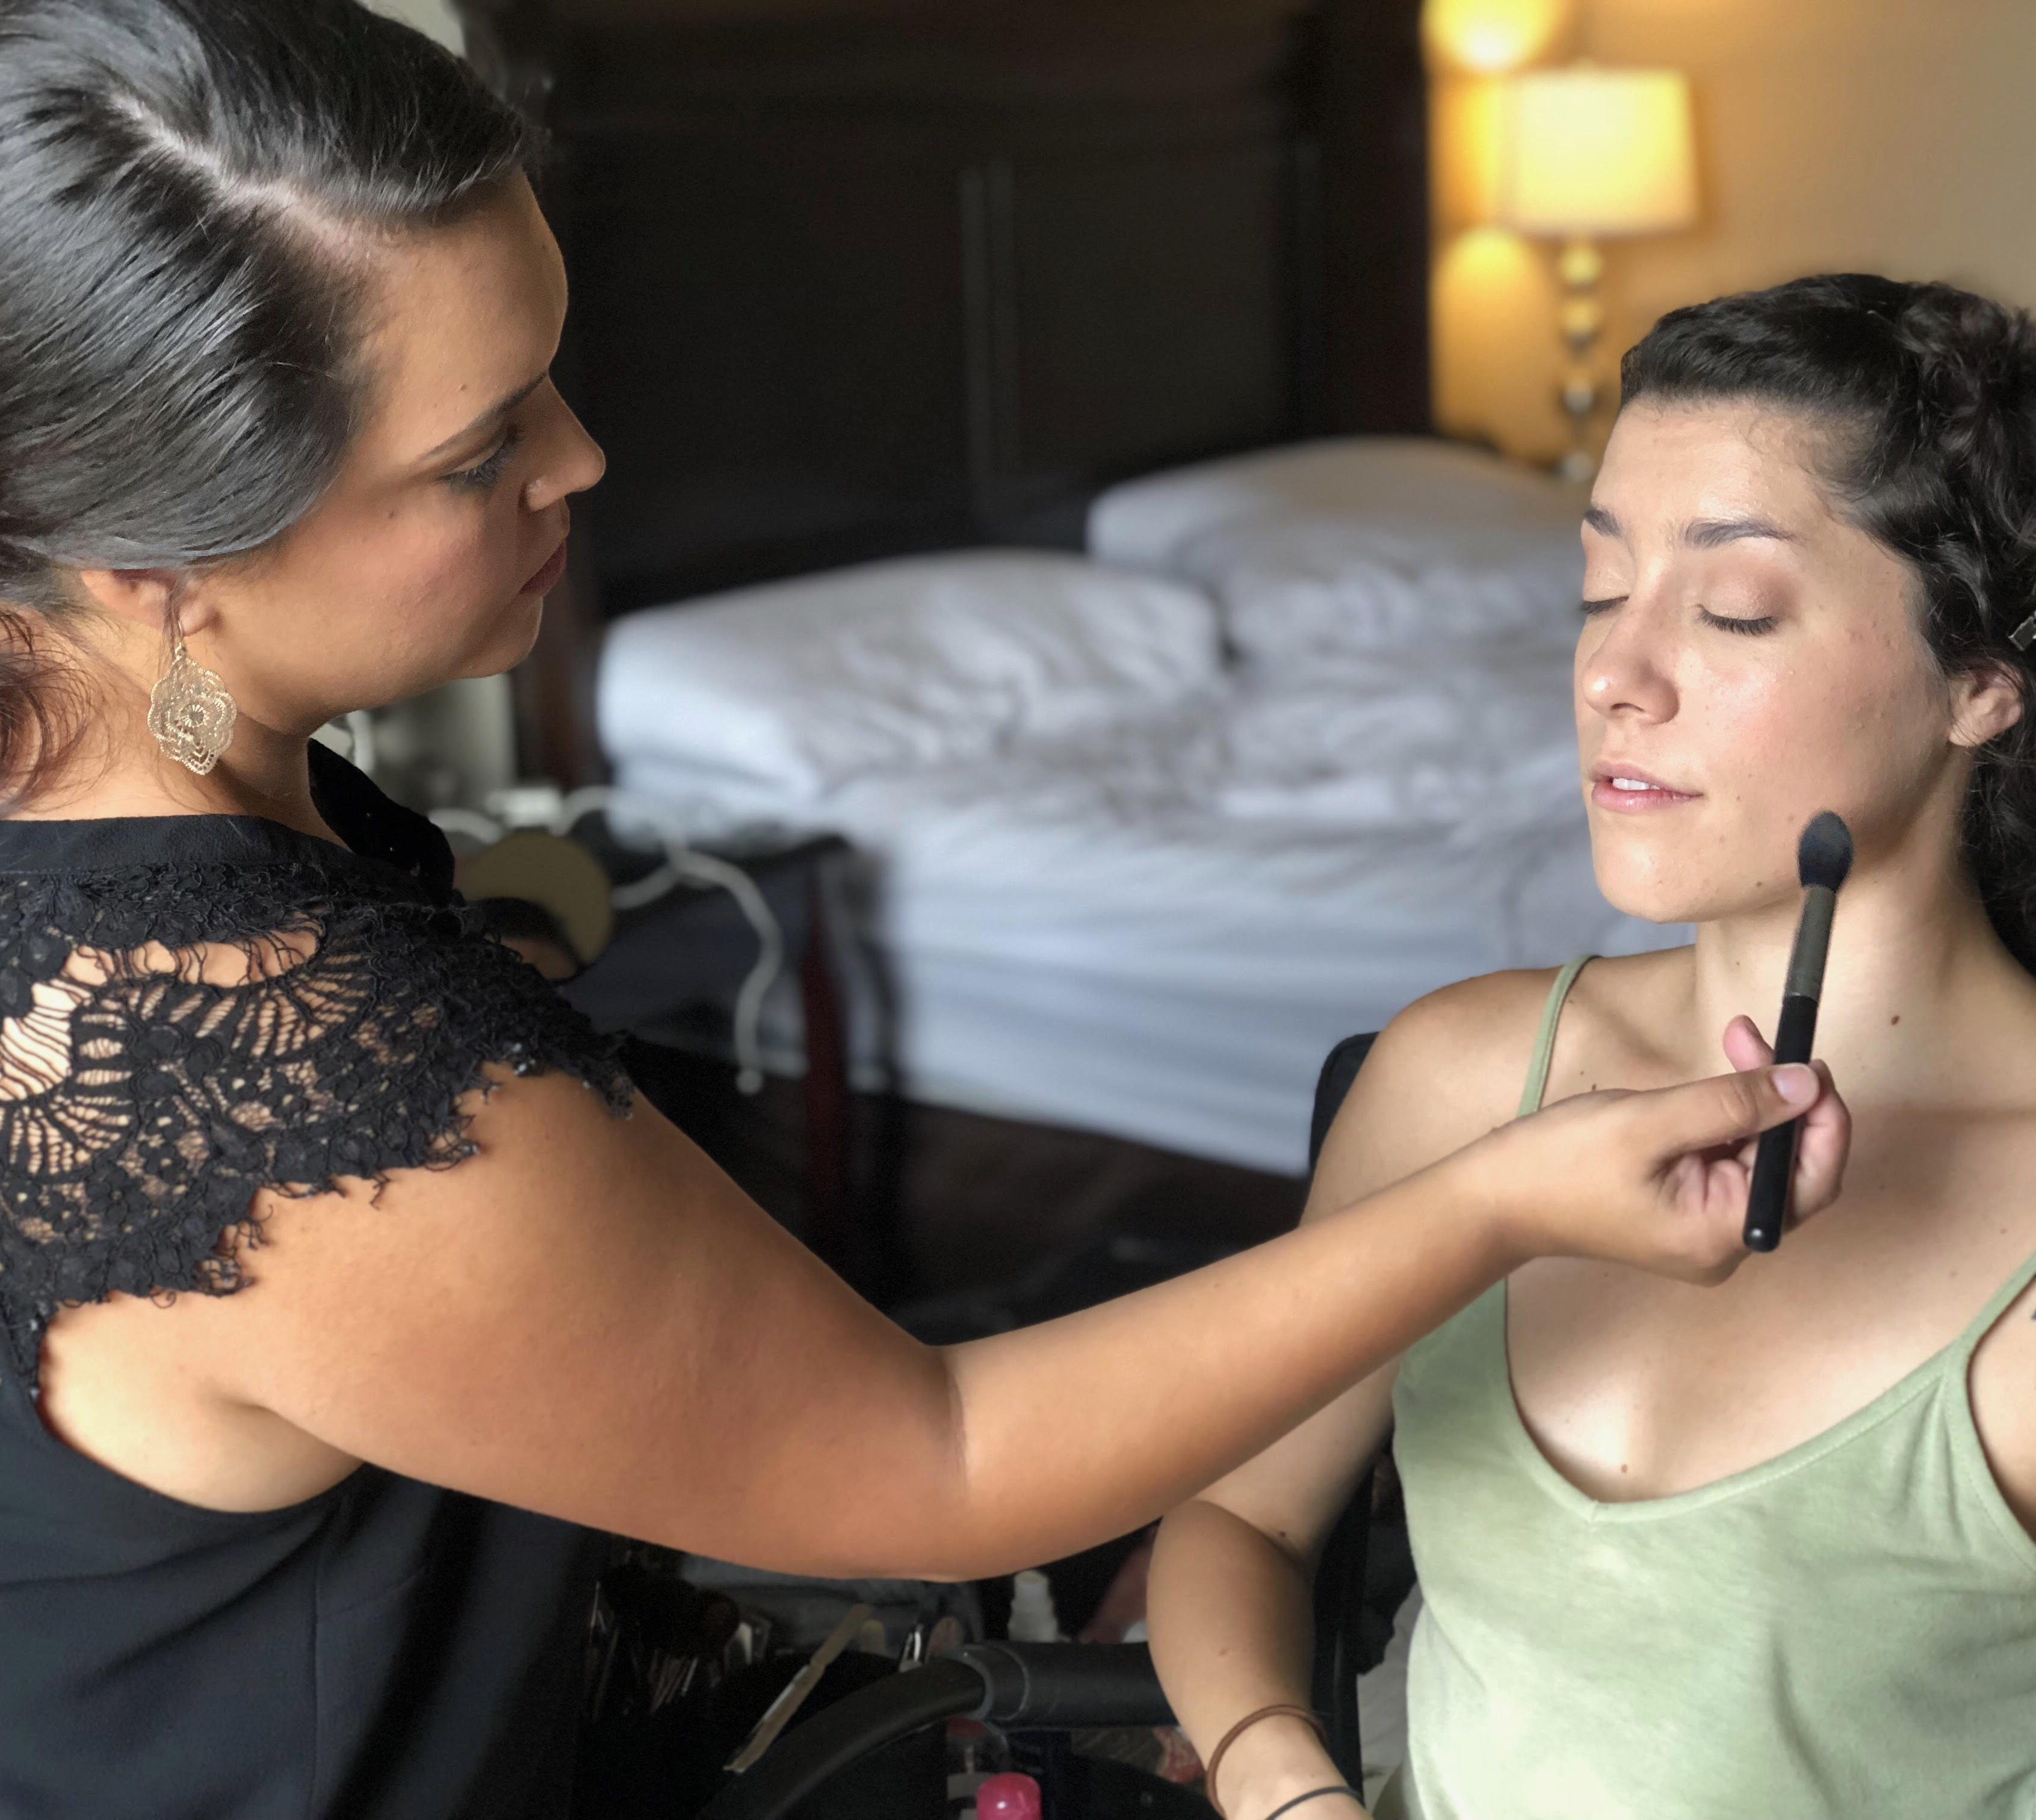 Make-up artist loves helping brides look beautiful